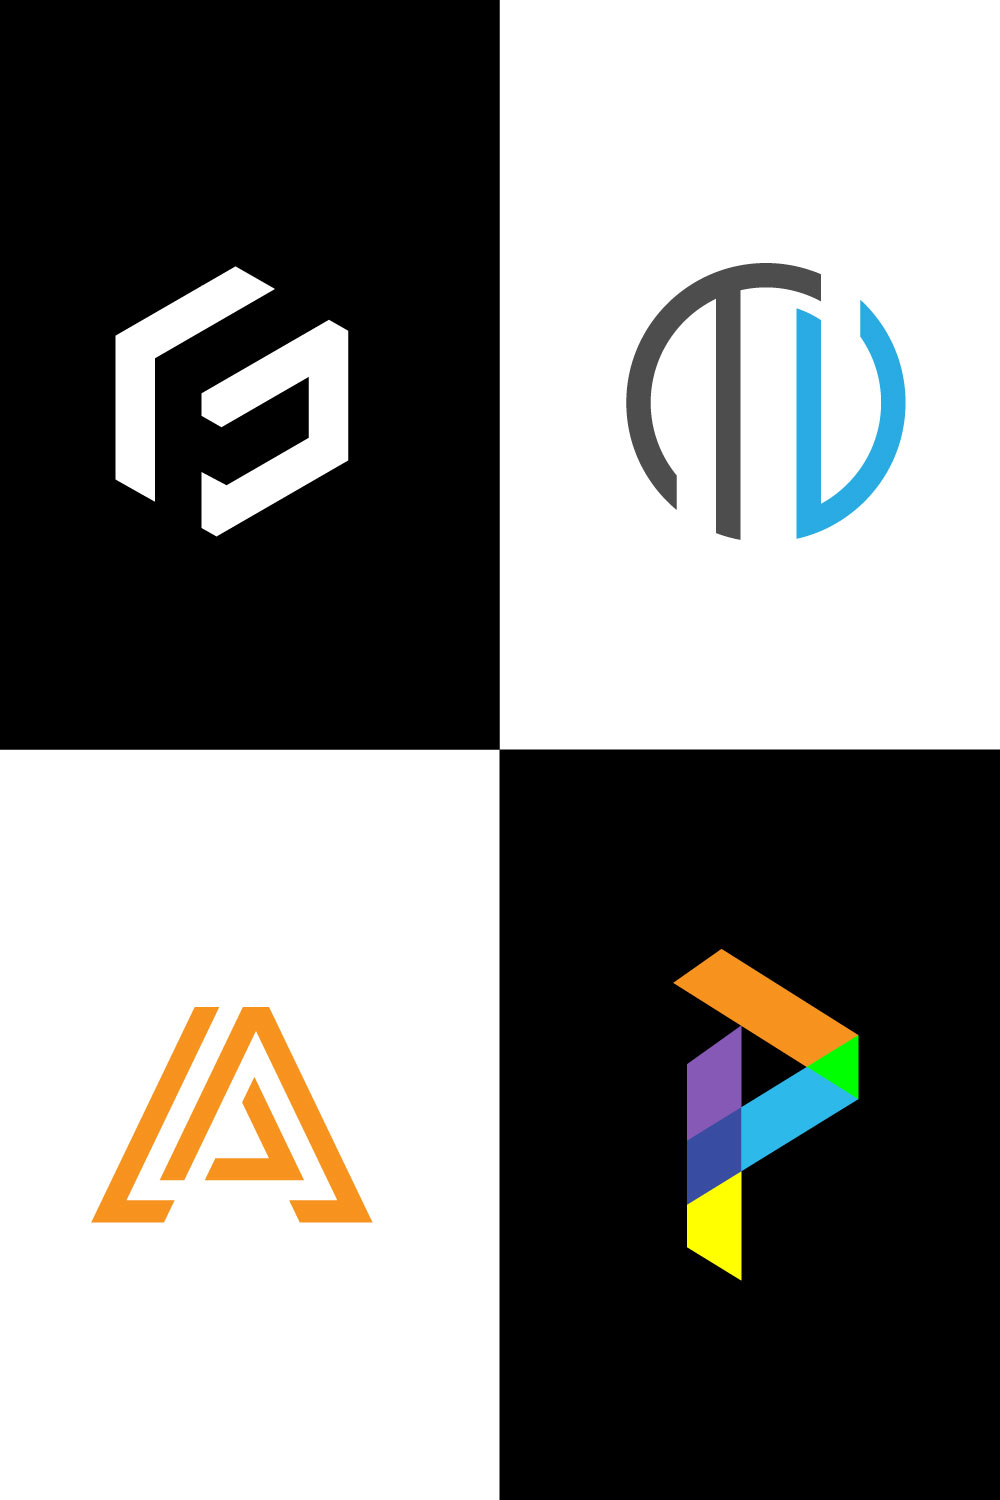 Four Simple Logo Design Pinterest image.